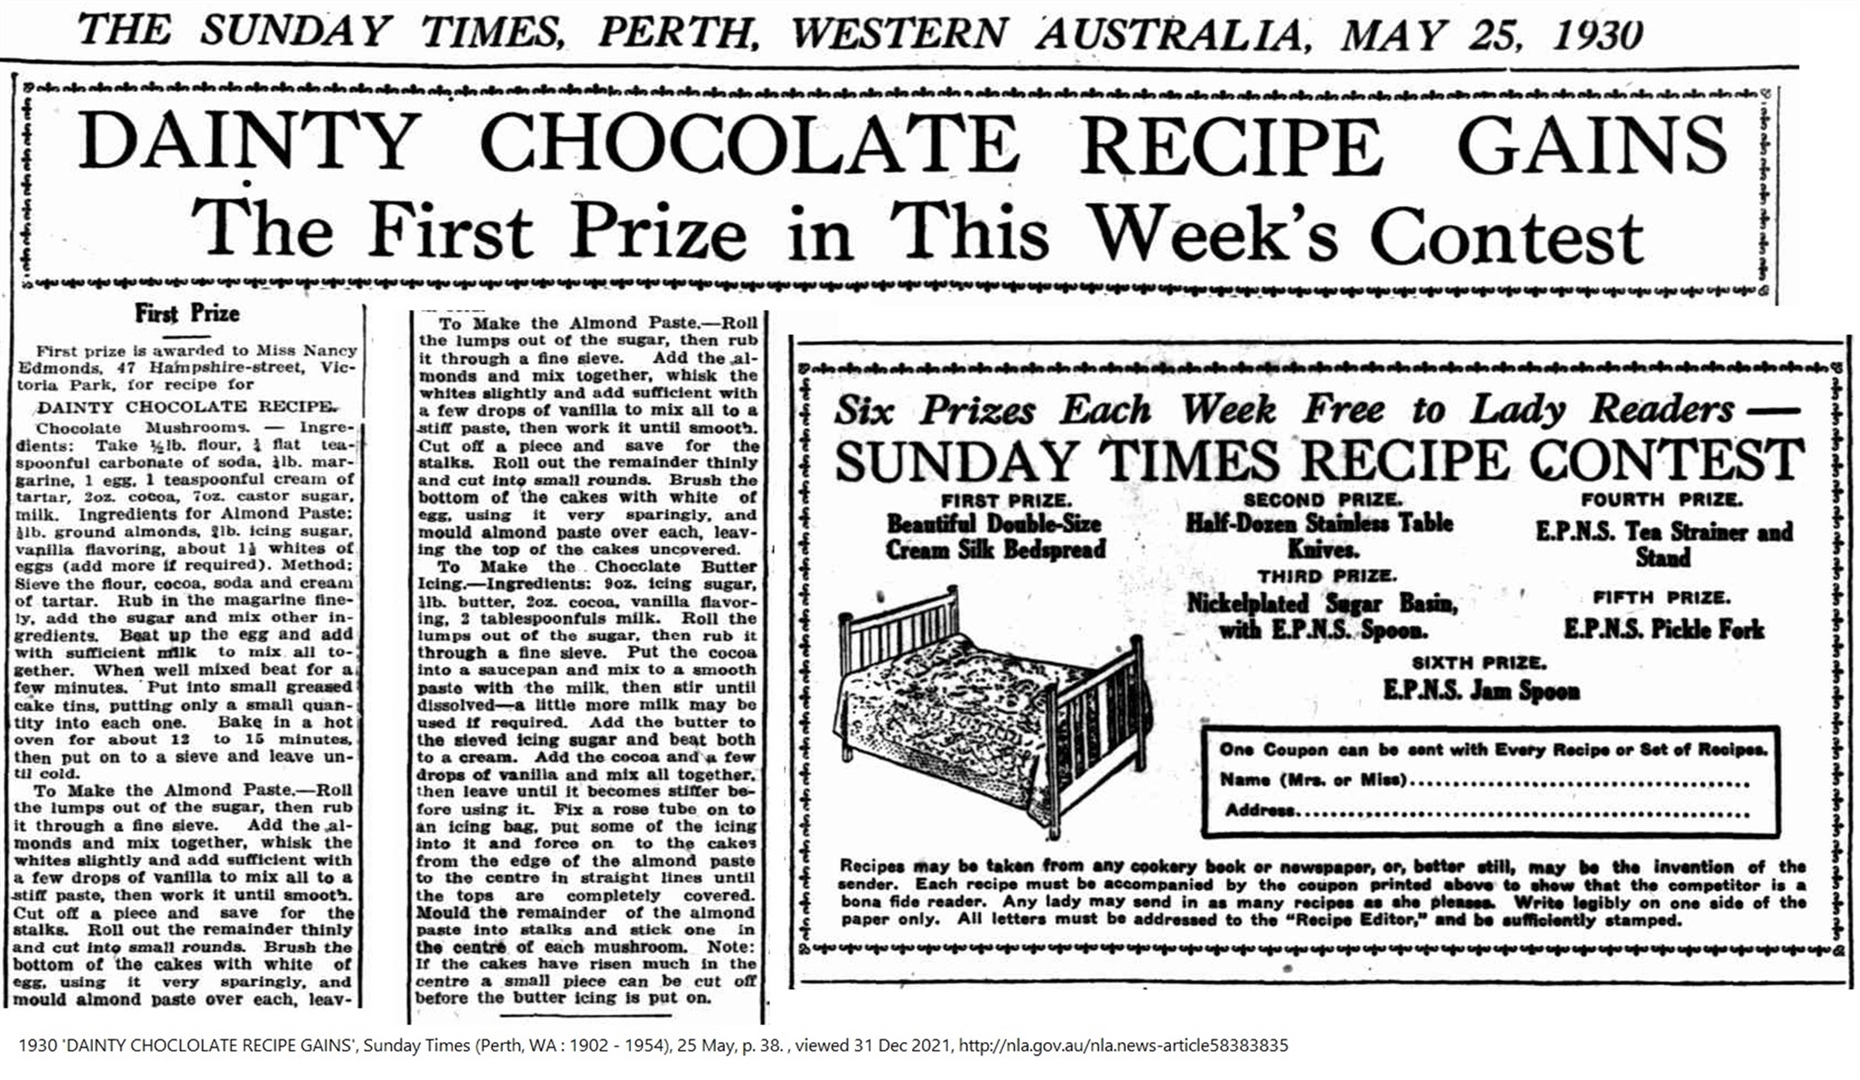 ‘Dainty Chocolate Recipe’, The Sunday Times, 25 May 1930, p. 38. Image